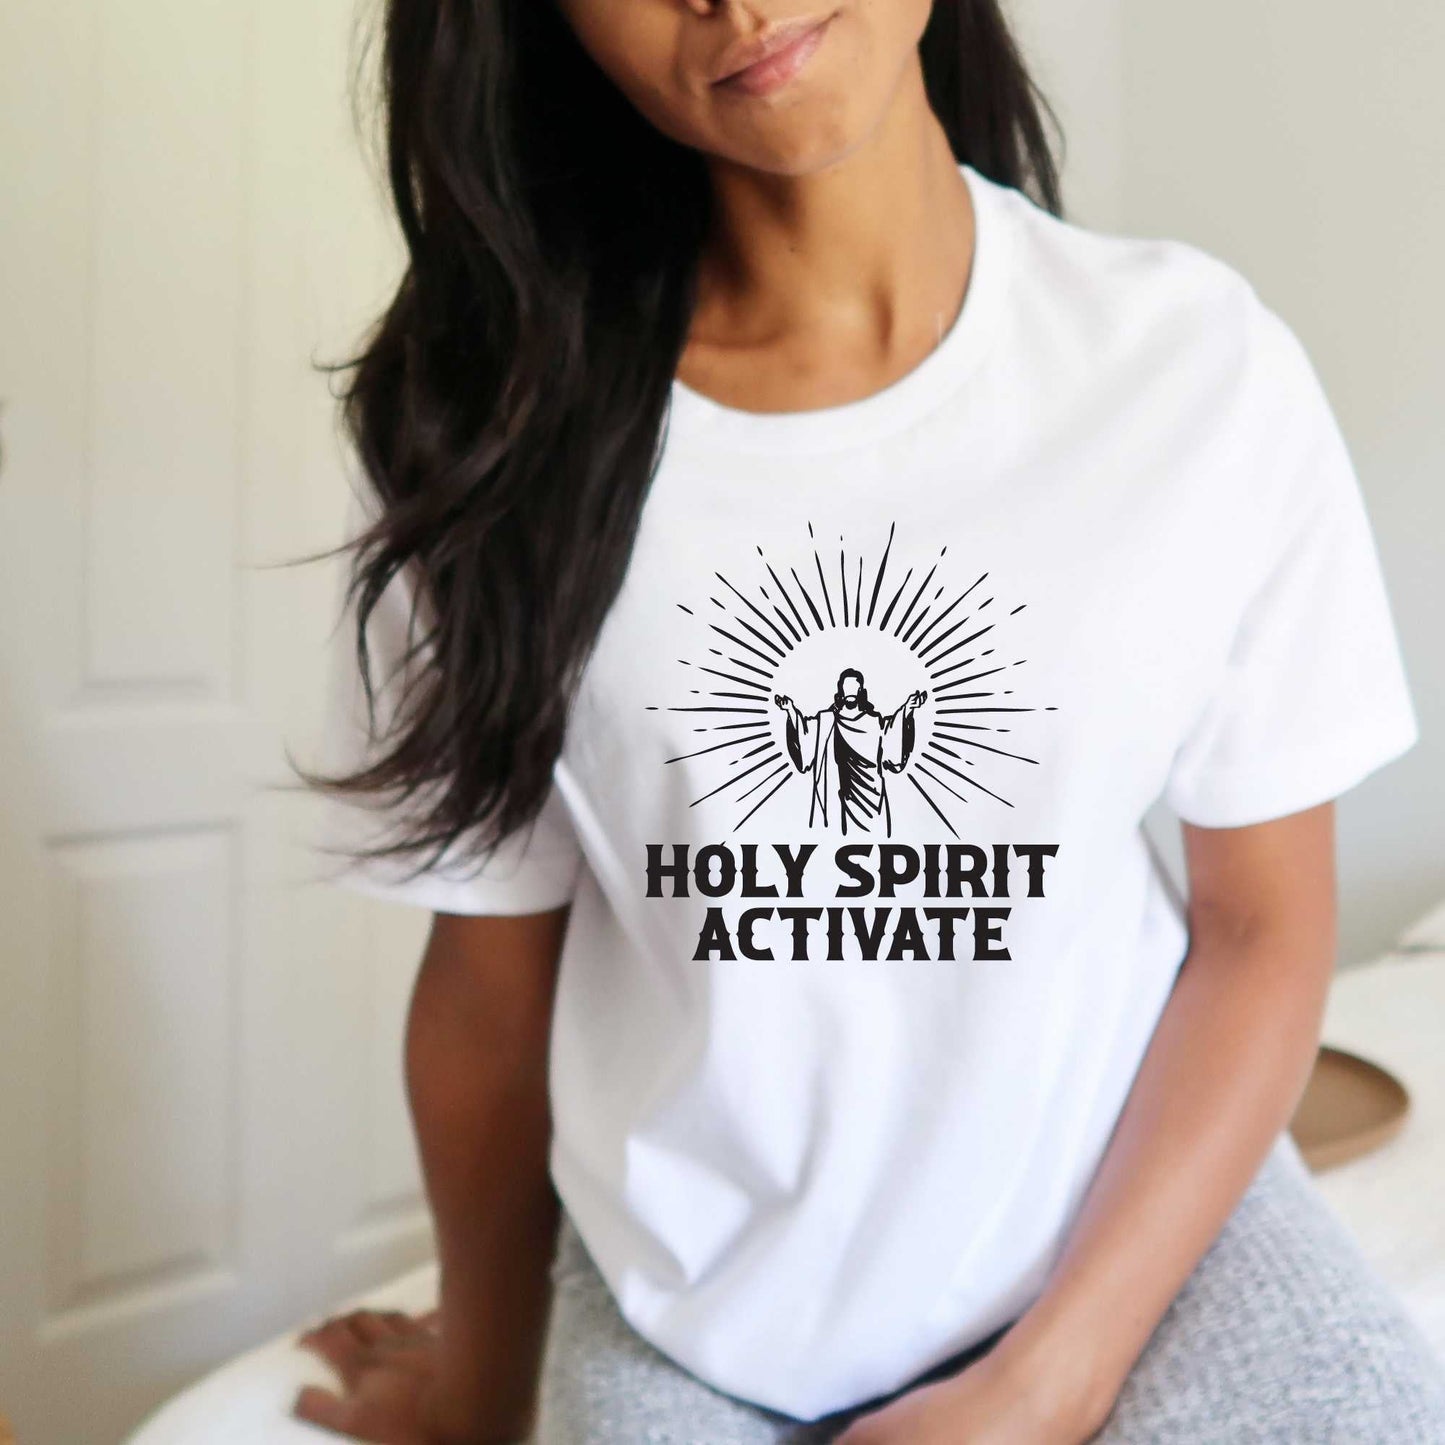 Holy Spirit Activate, Cool Christian Apparel for Women, Men & Teens